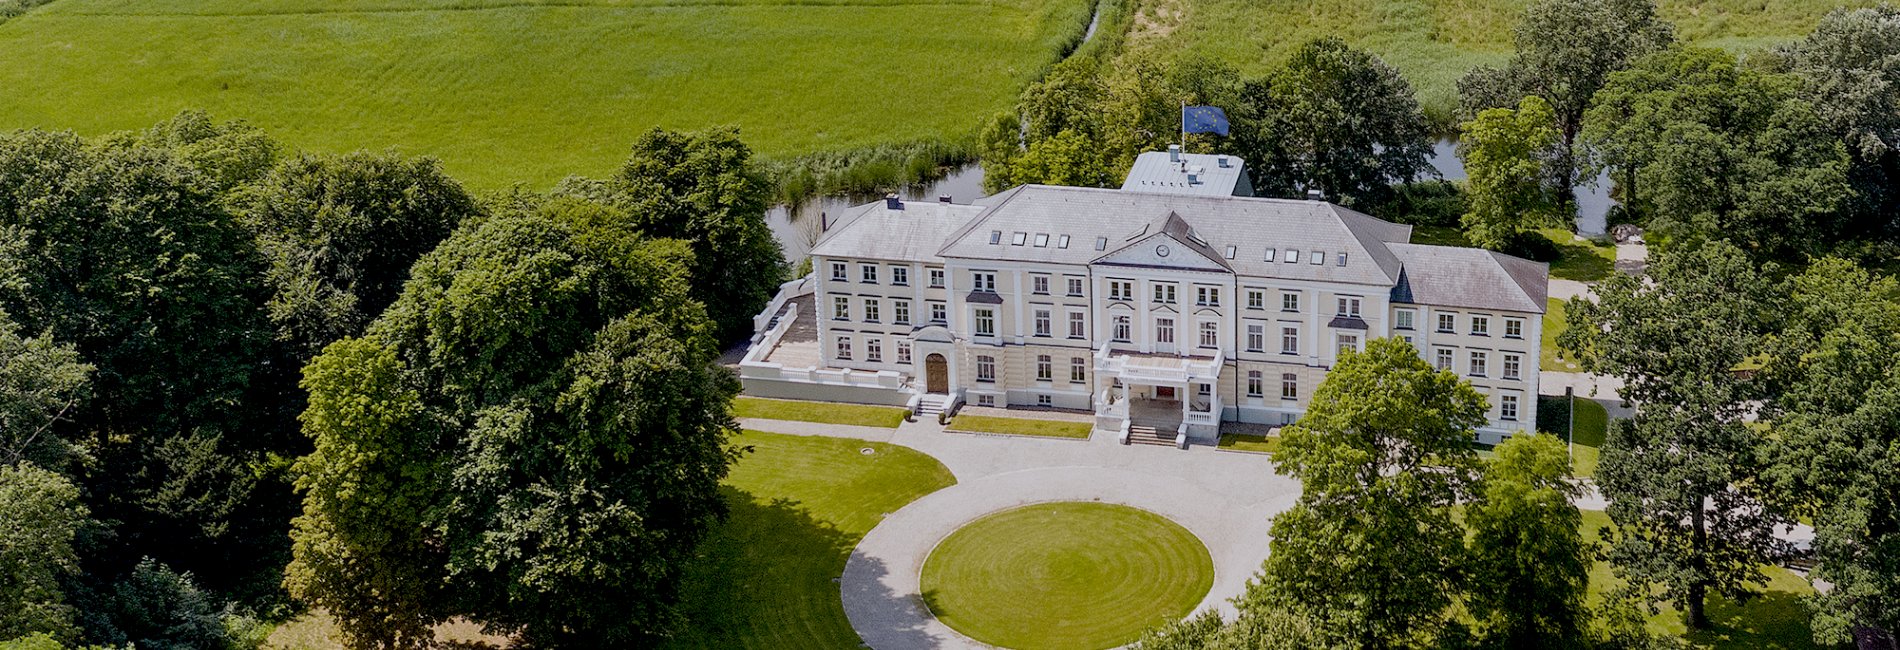 Schmerzklinik - Klinikum Schloss Lütgenhof